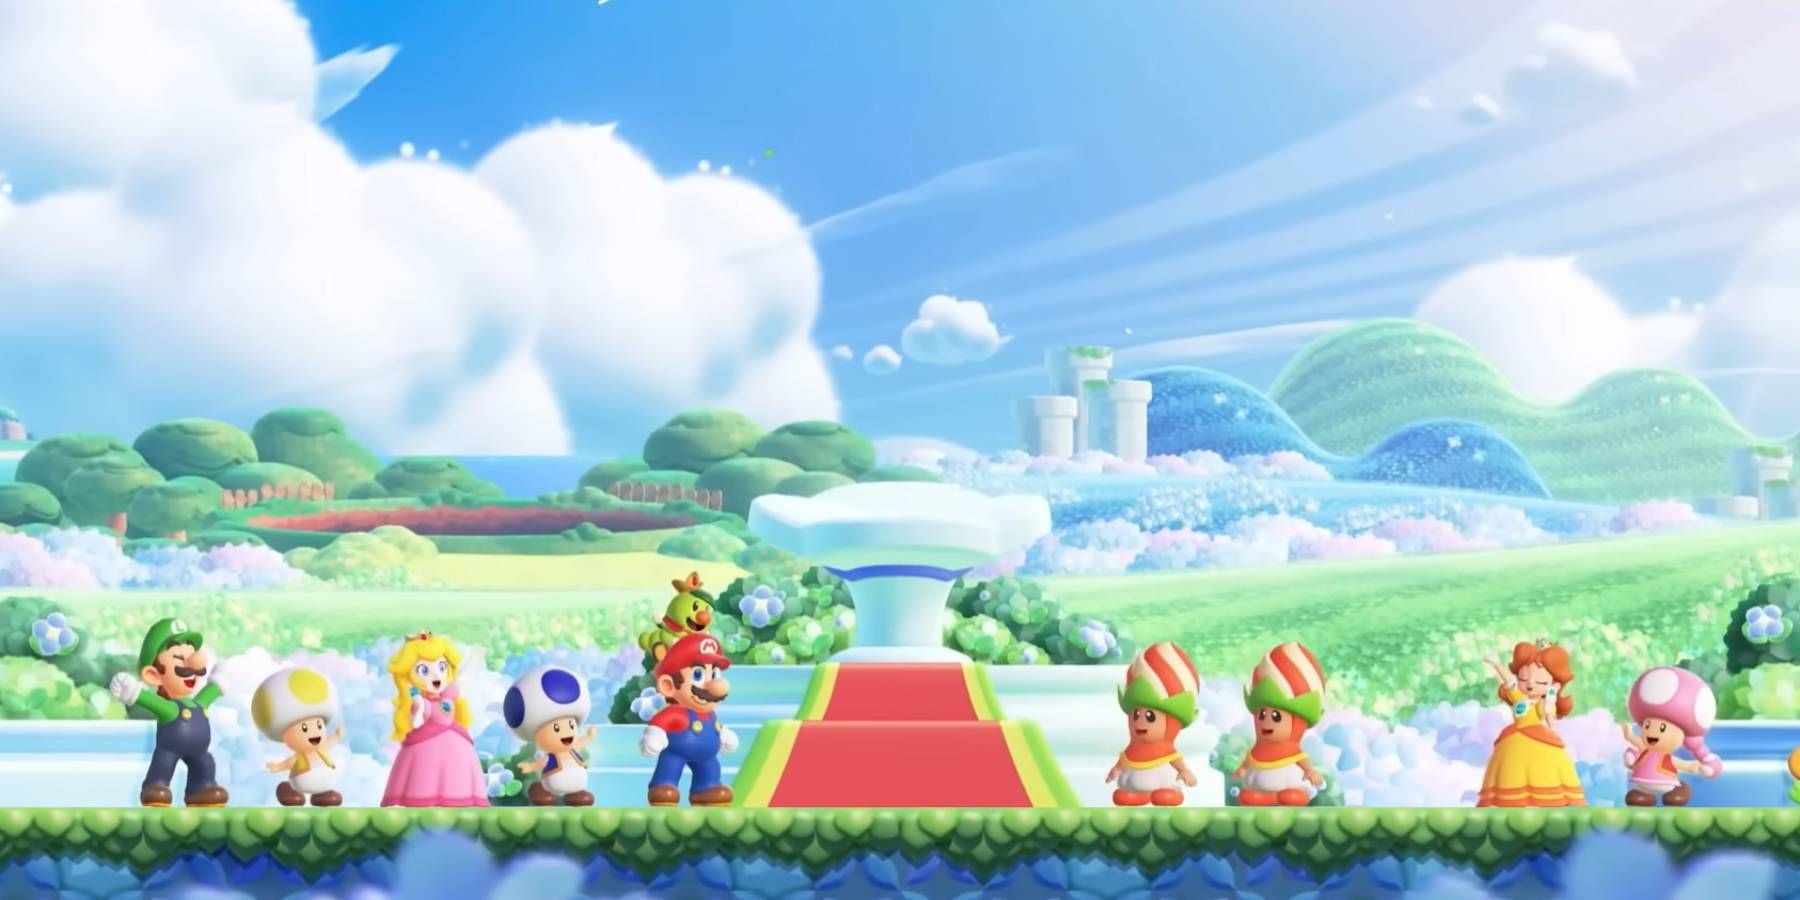 A crowd shot from Super Mario Bros. Wonder's Direct trailer